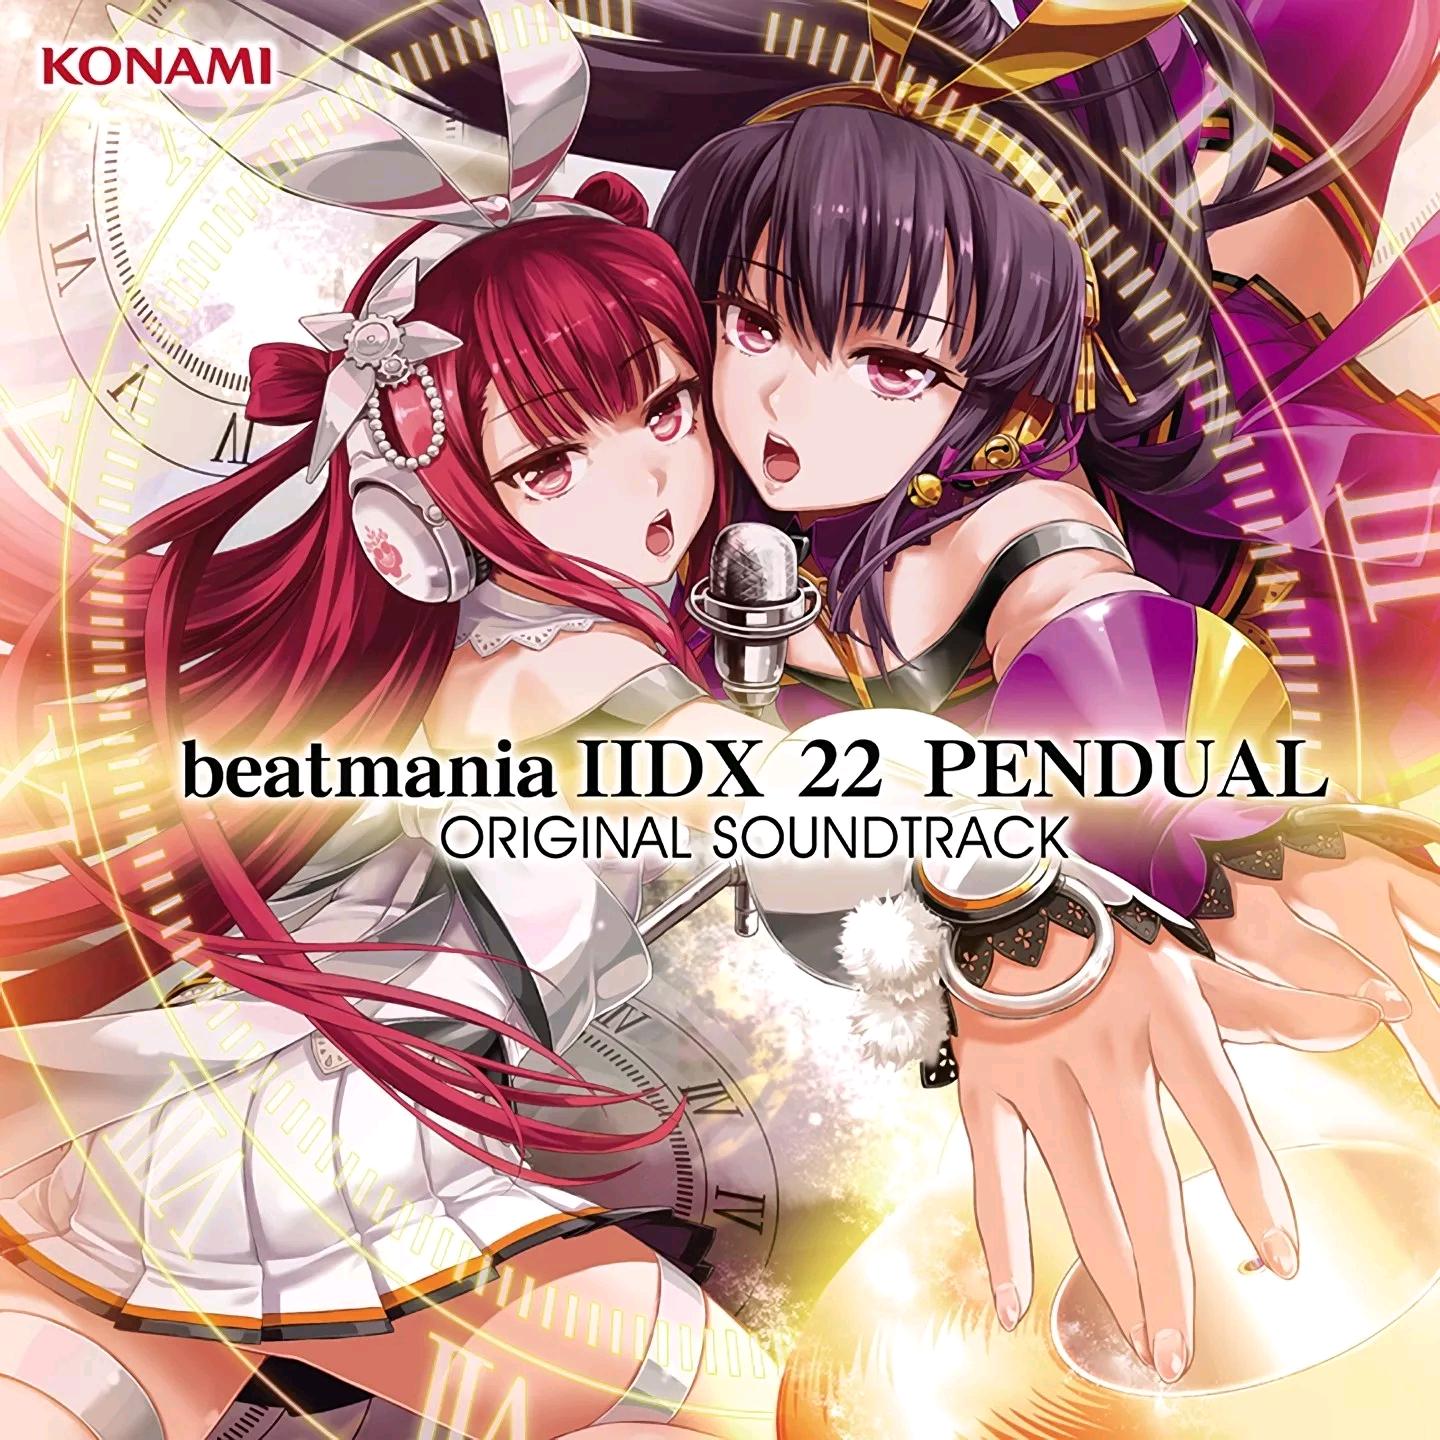 Beatmania Iidx 22 Pendual музыка из игры Beatmania Iidx 22 Pendual Original Soundtrack